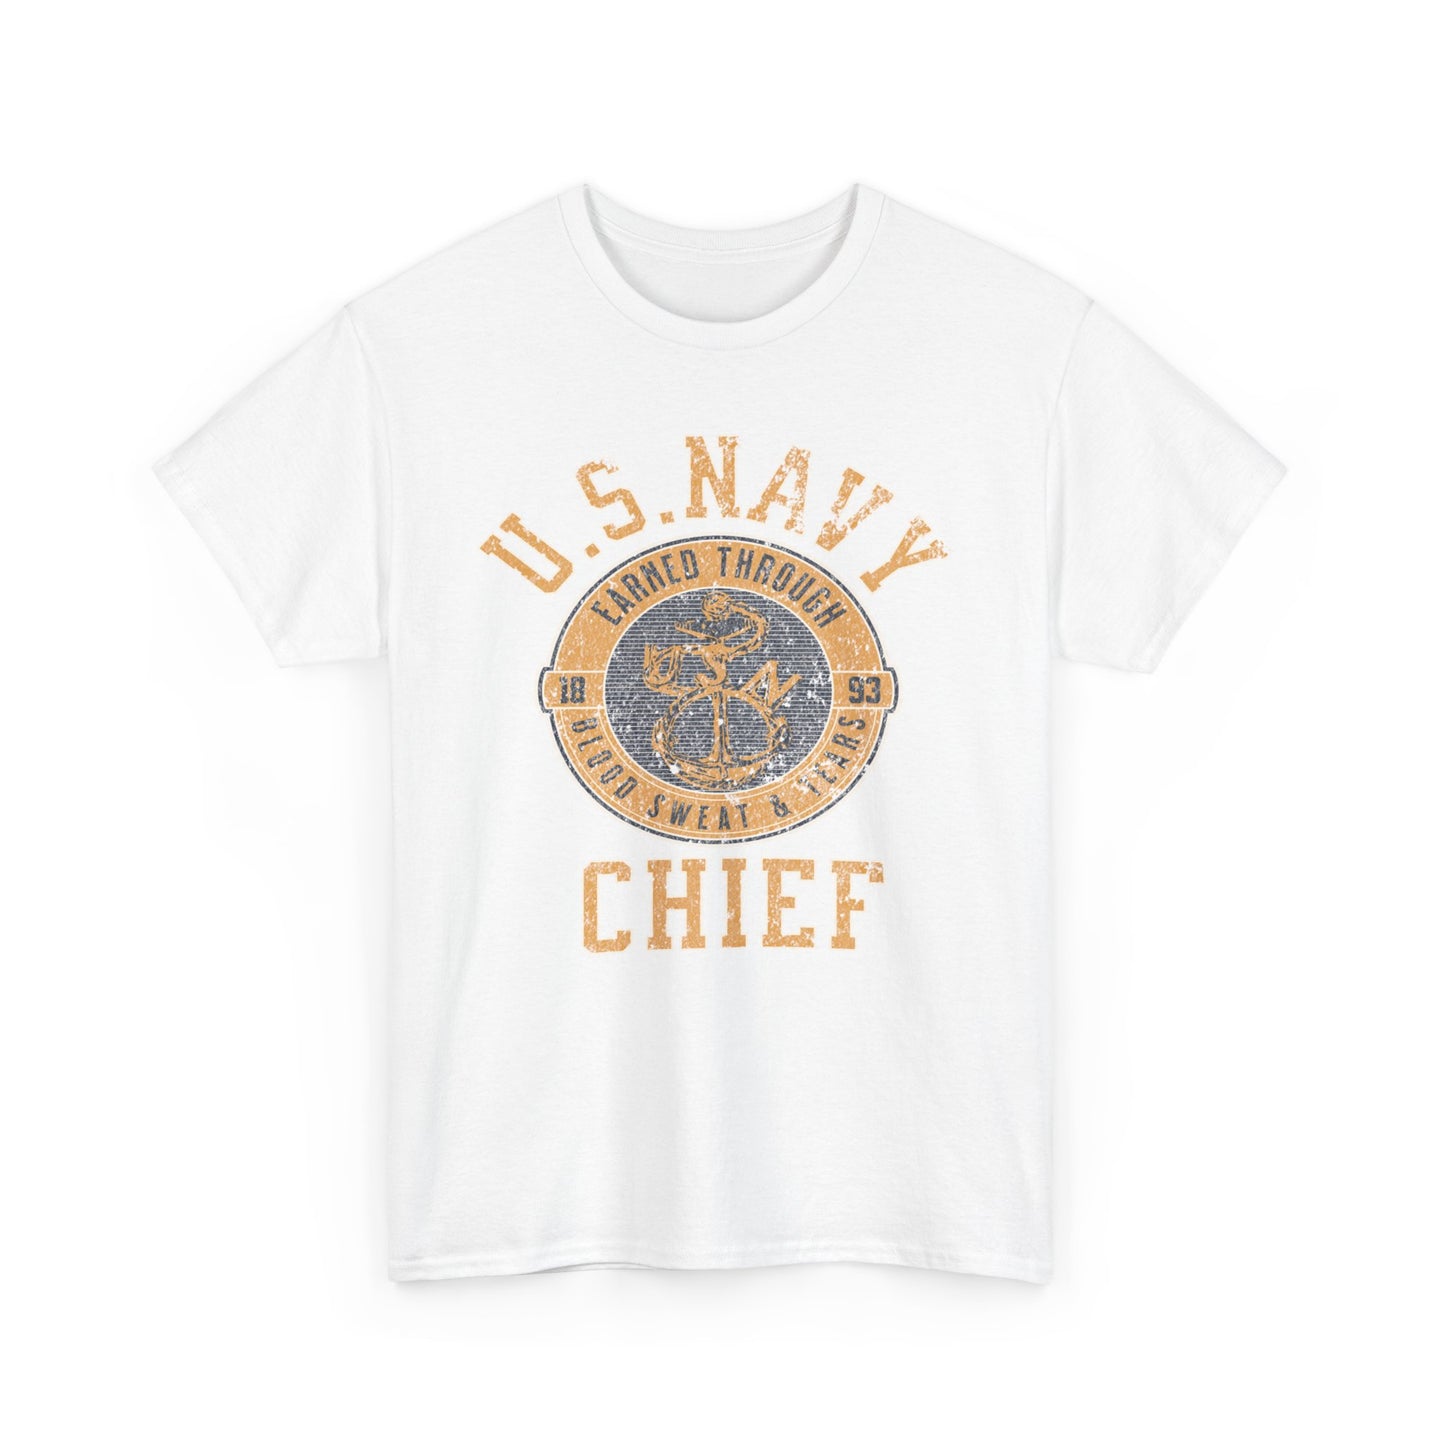 US Navy Chief